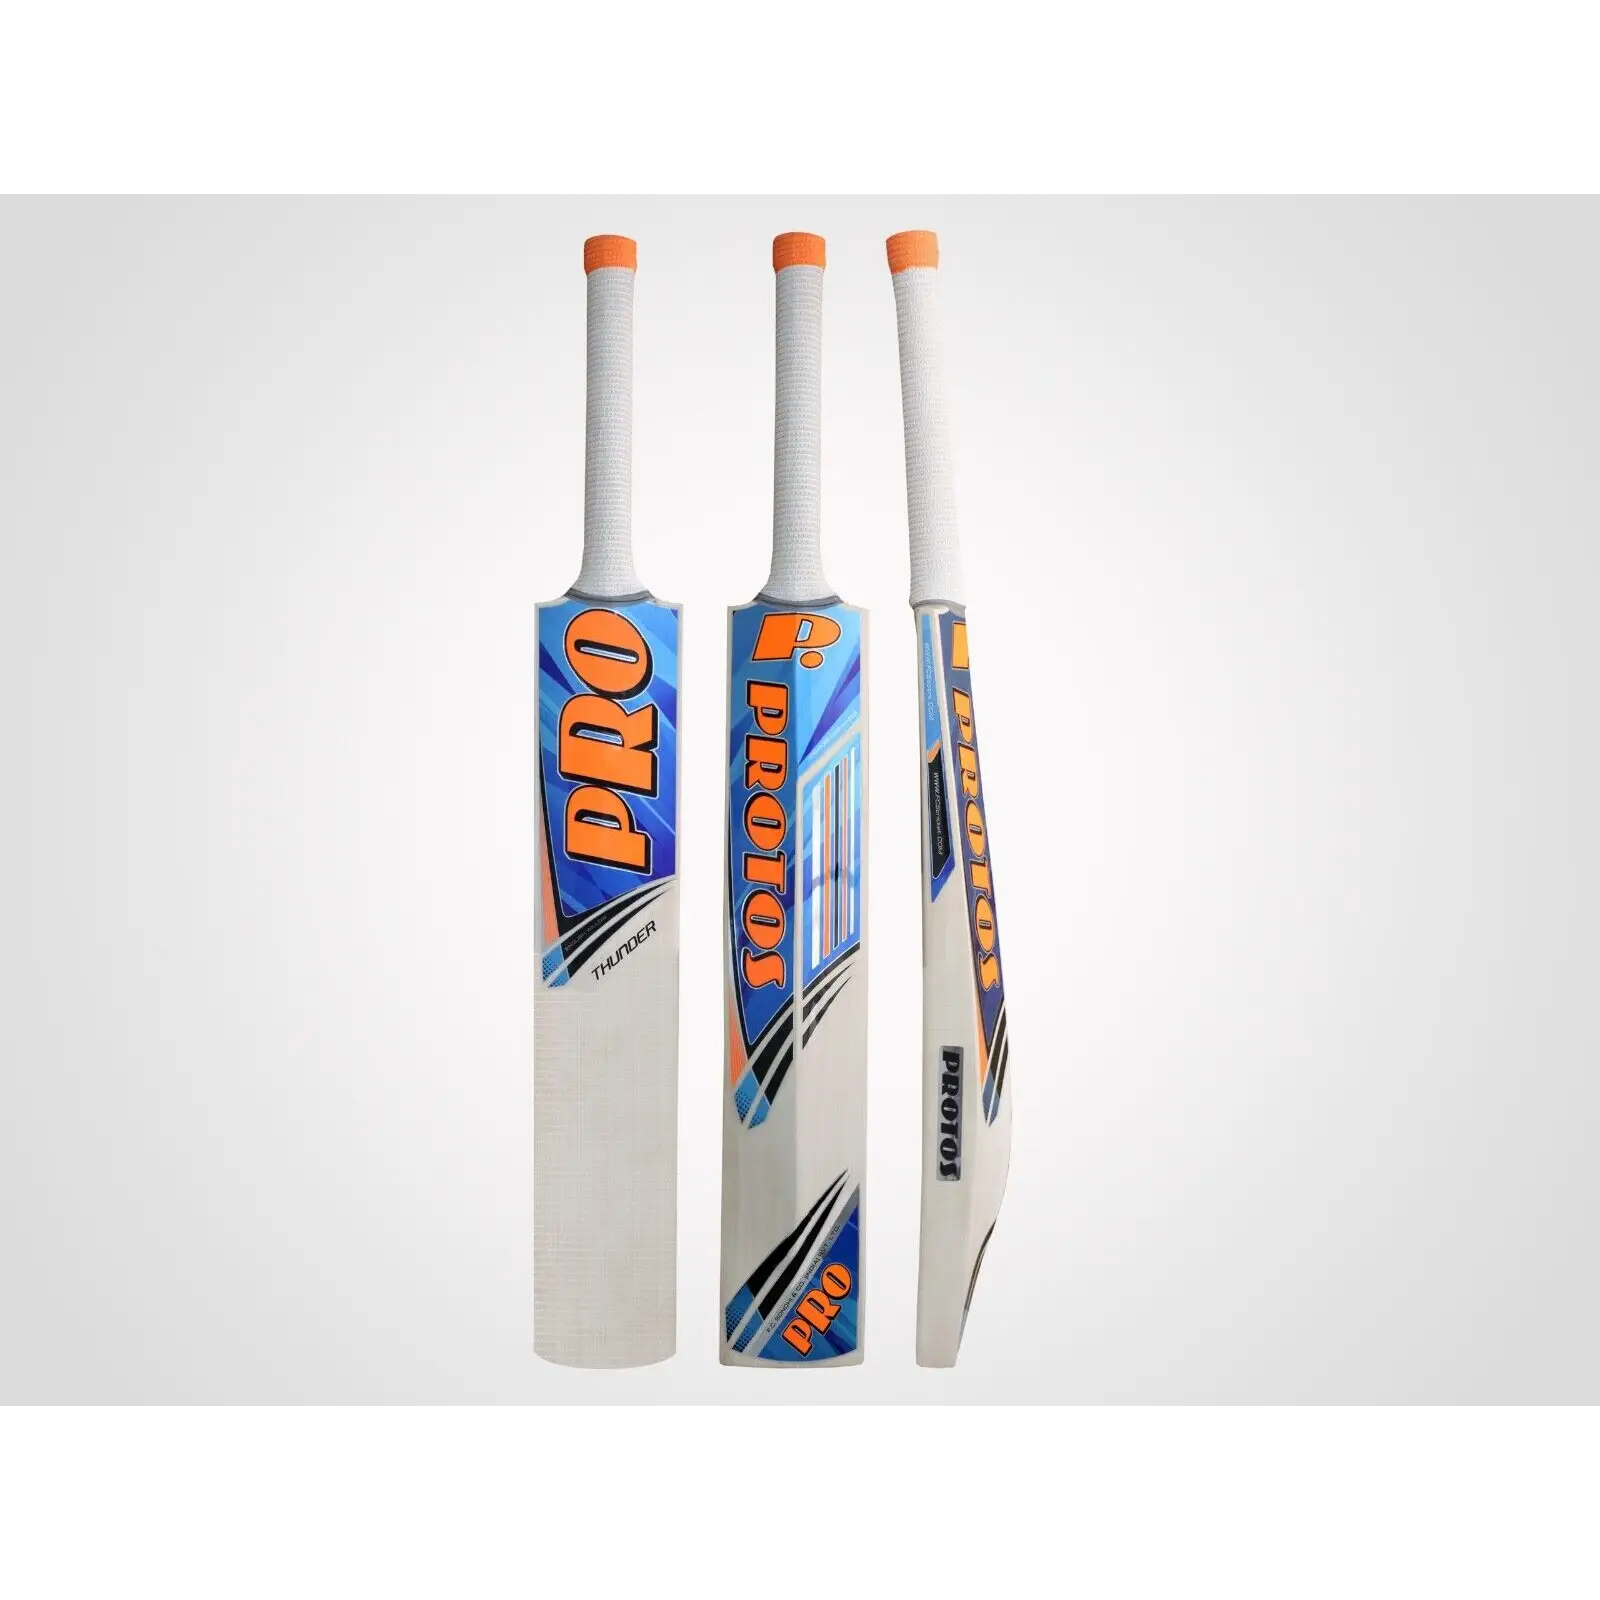 Protos Pro Thunder Cricket Bat - Short Handle (Standard Adult Size Bat) - BATS - MENS ENGLISH WILLOW